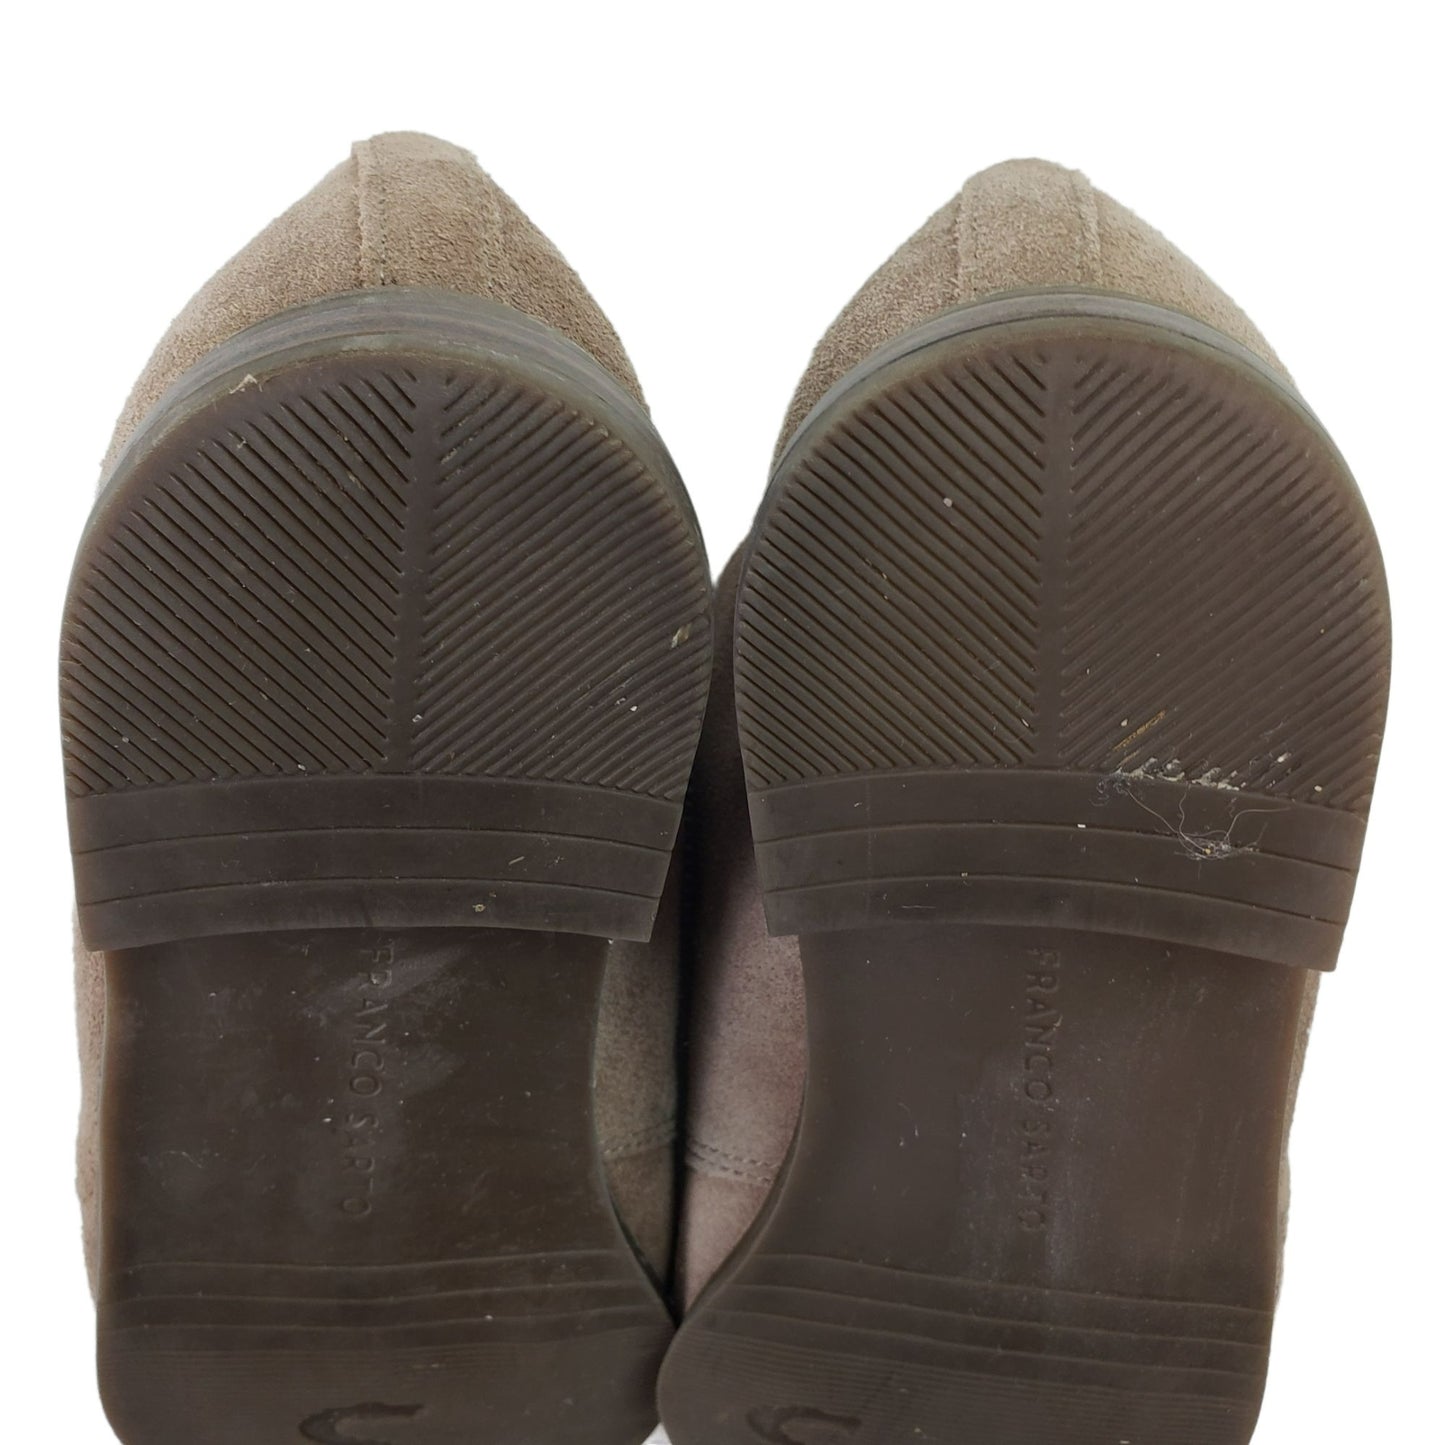 Franco Sarto Pieta Suede Leather Slip-On Shoes Size 8.5